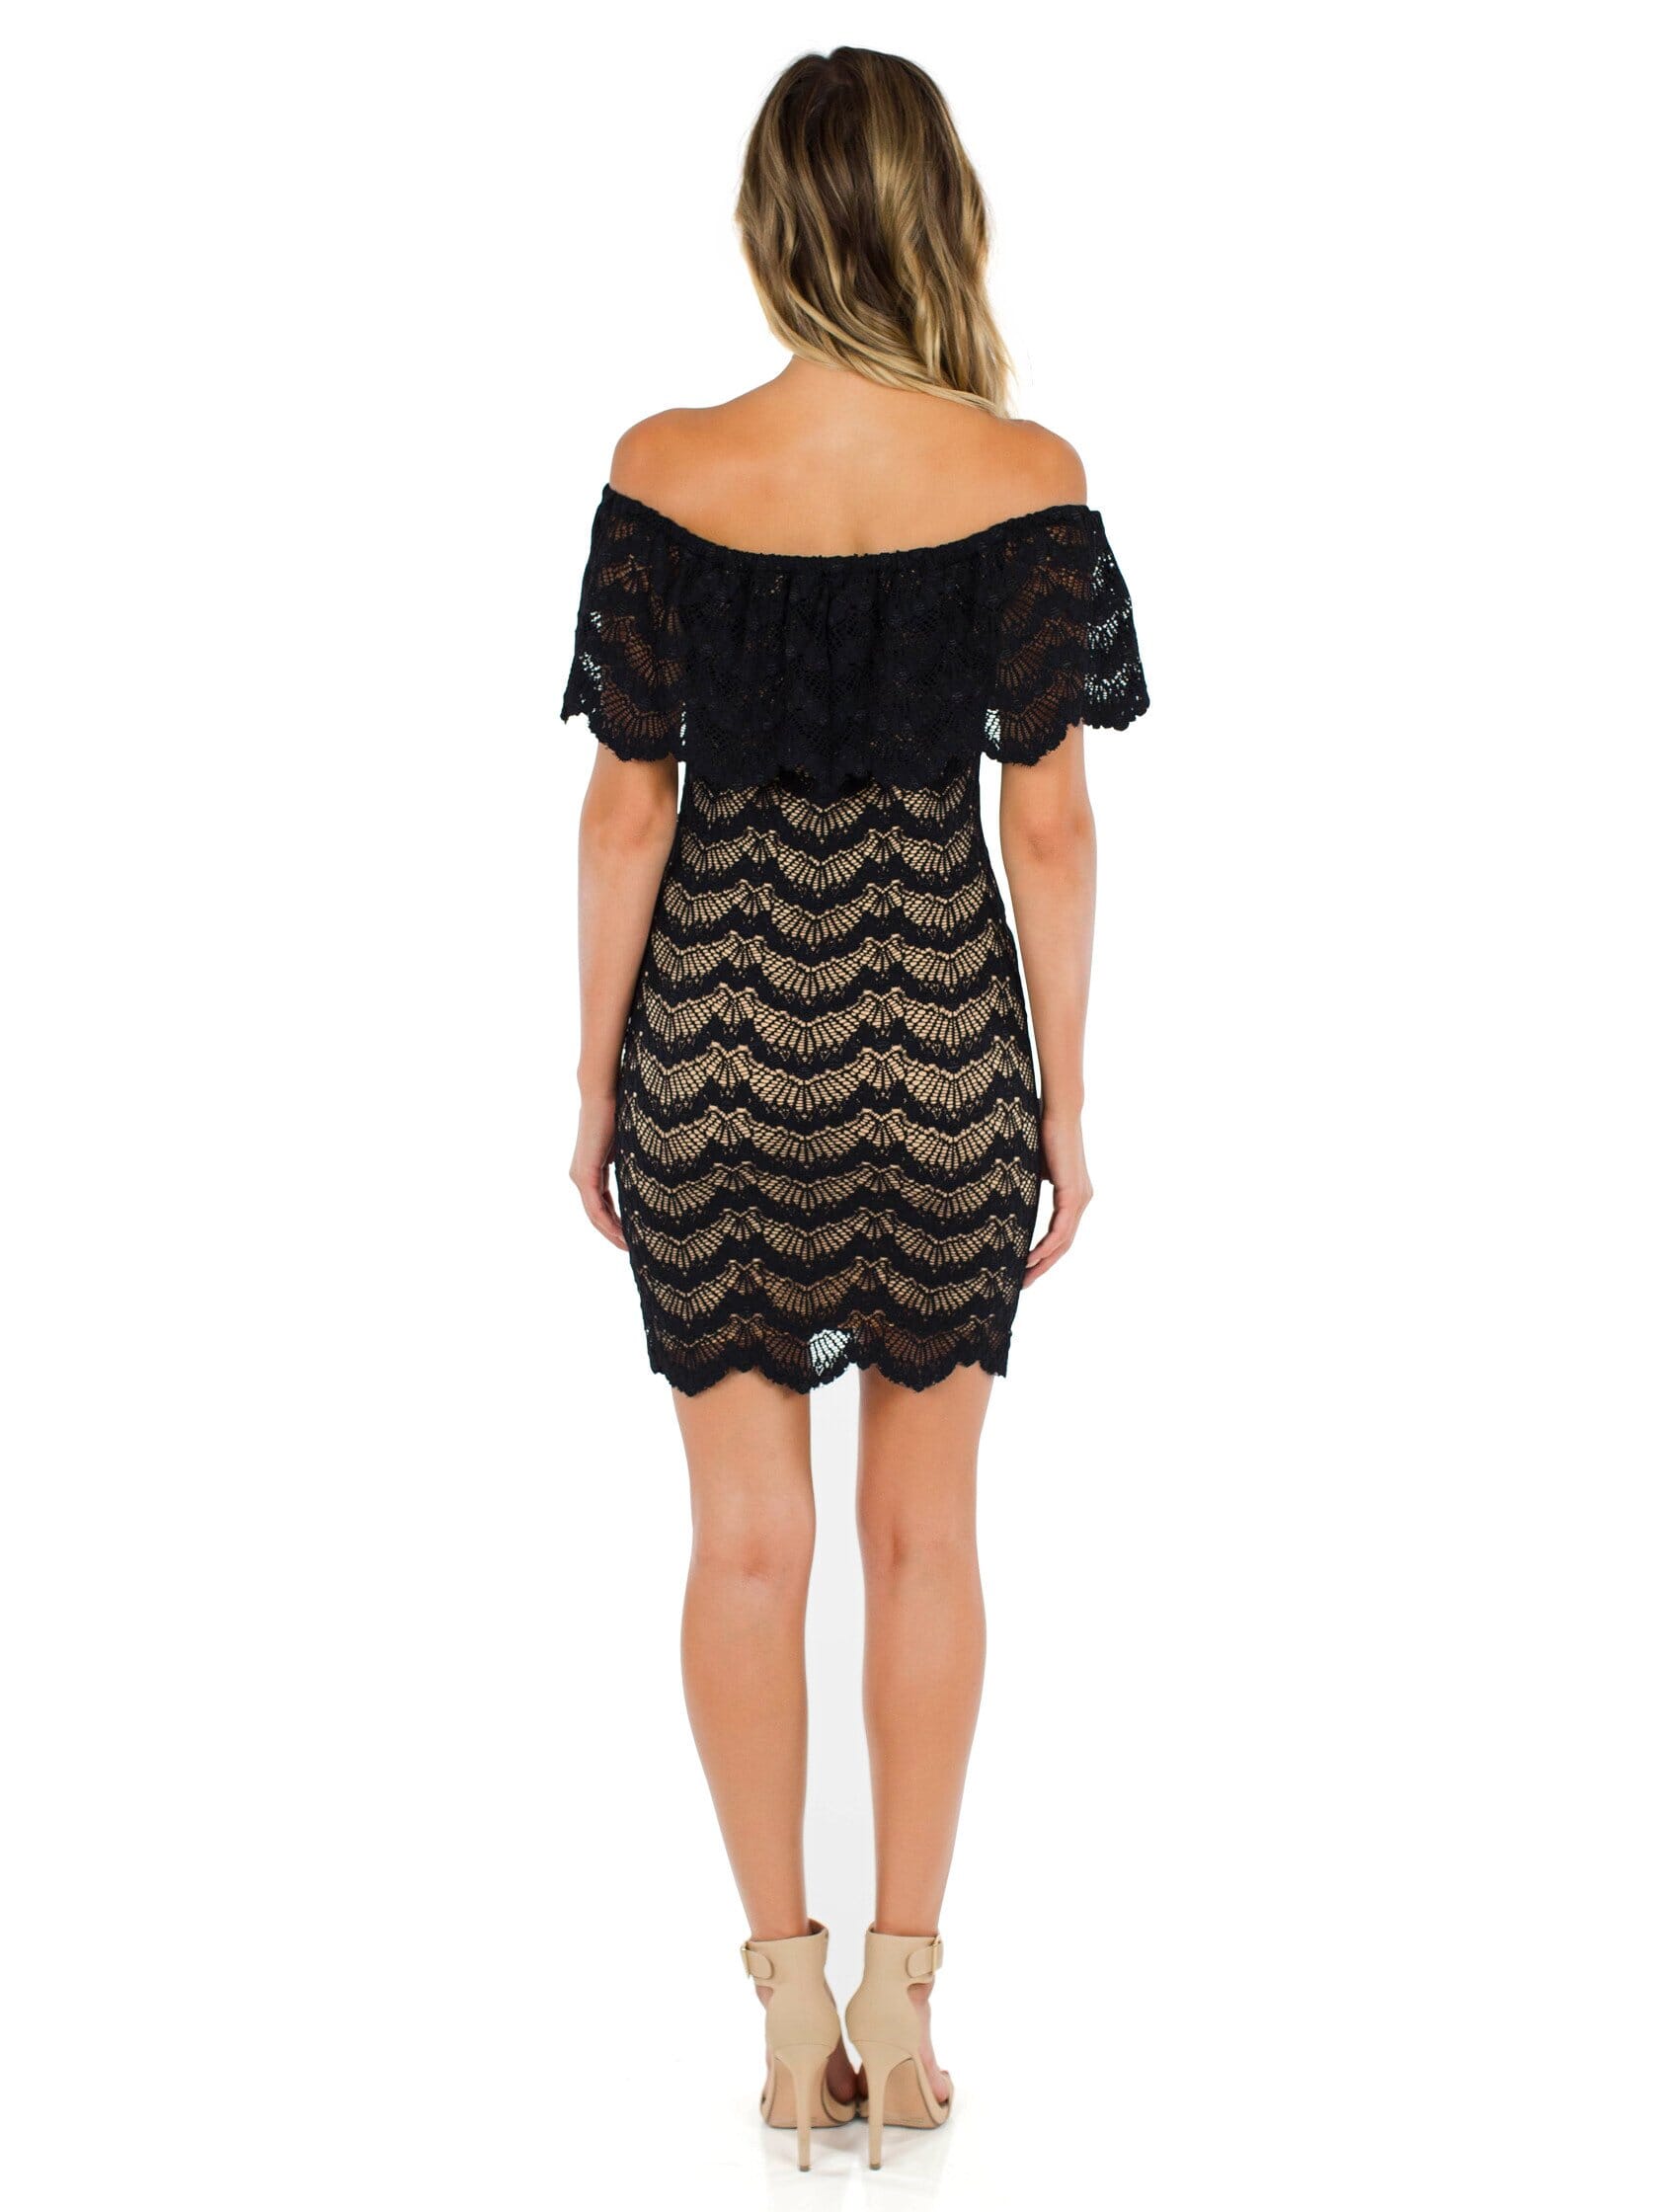 Nightcap Clothing Bachelorette Mini Dress in Black